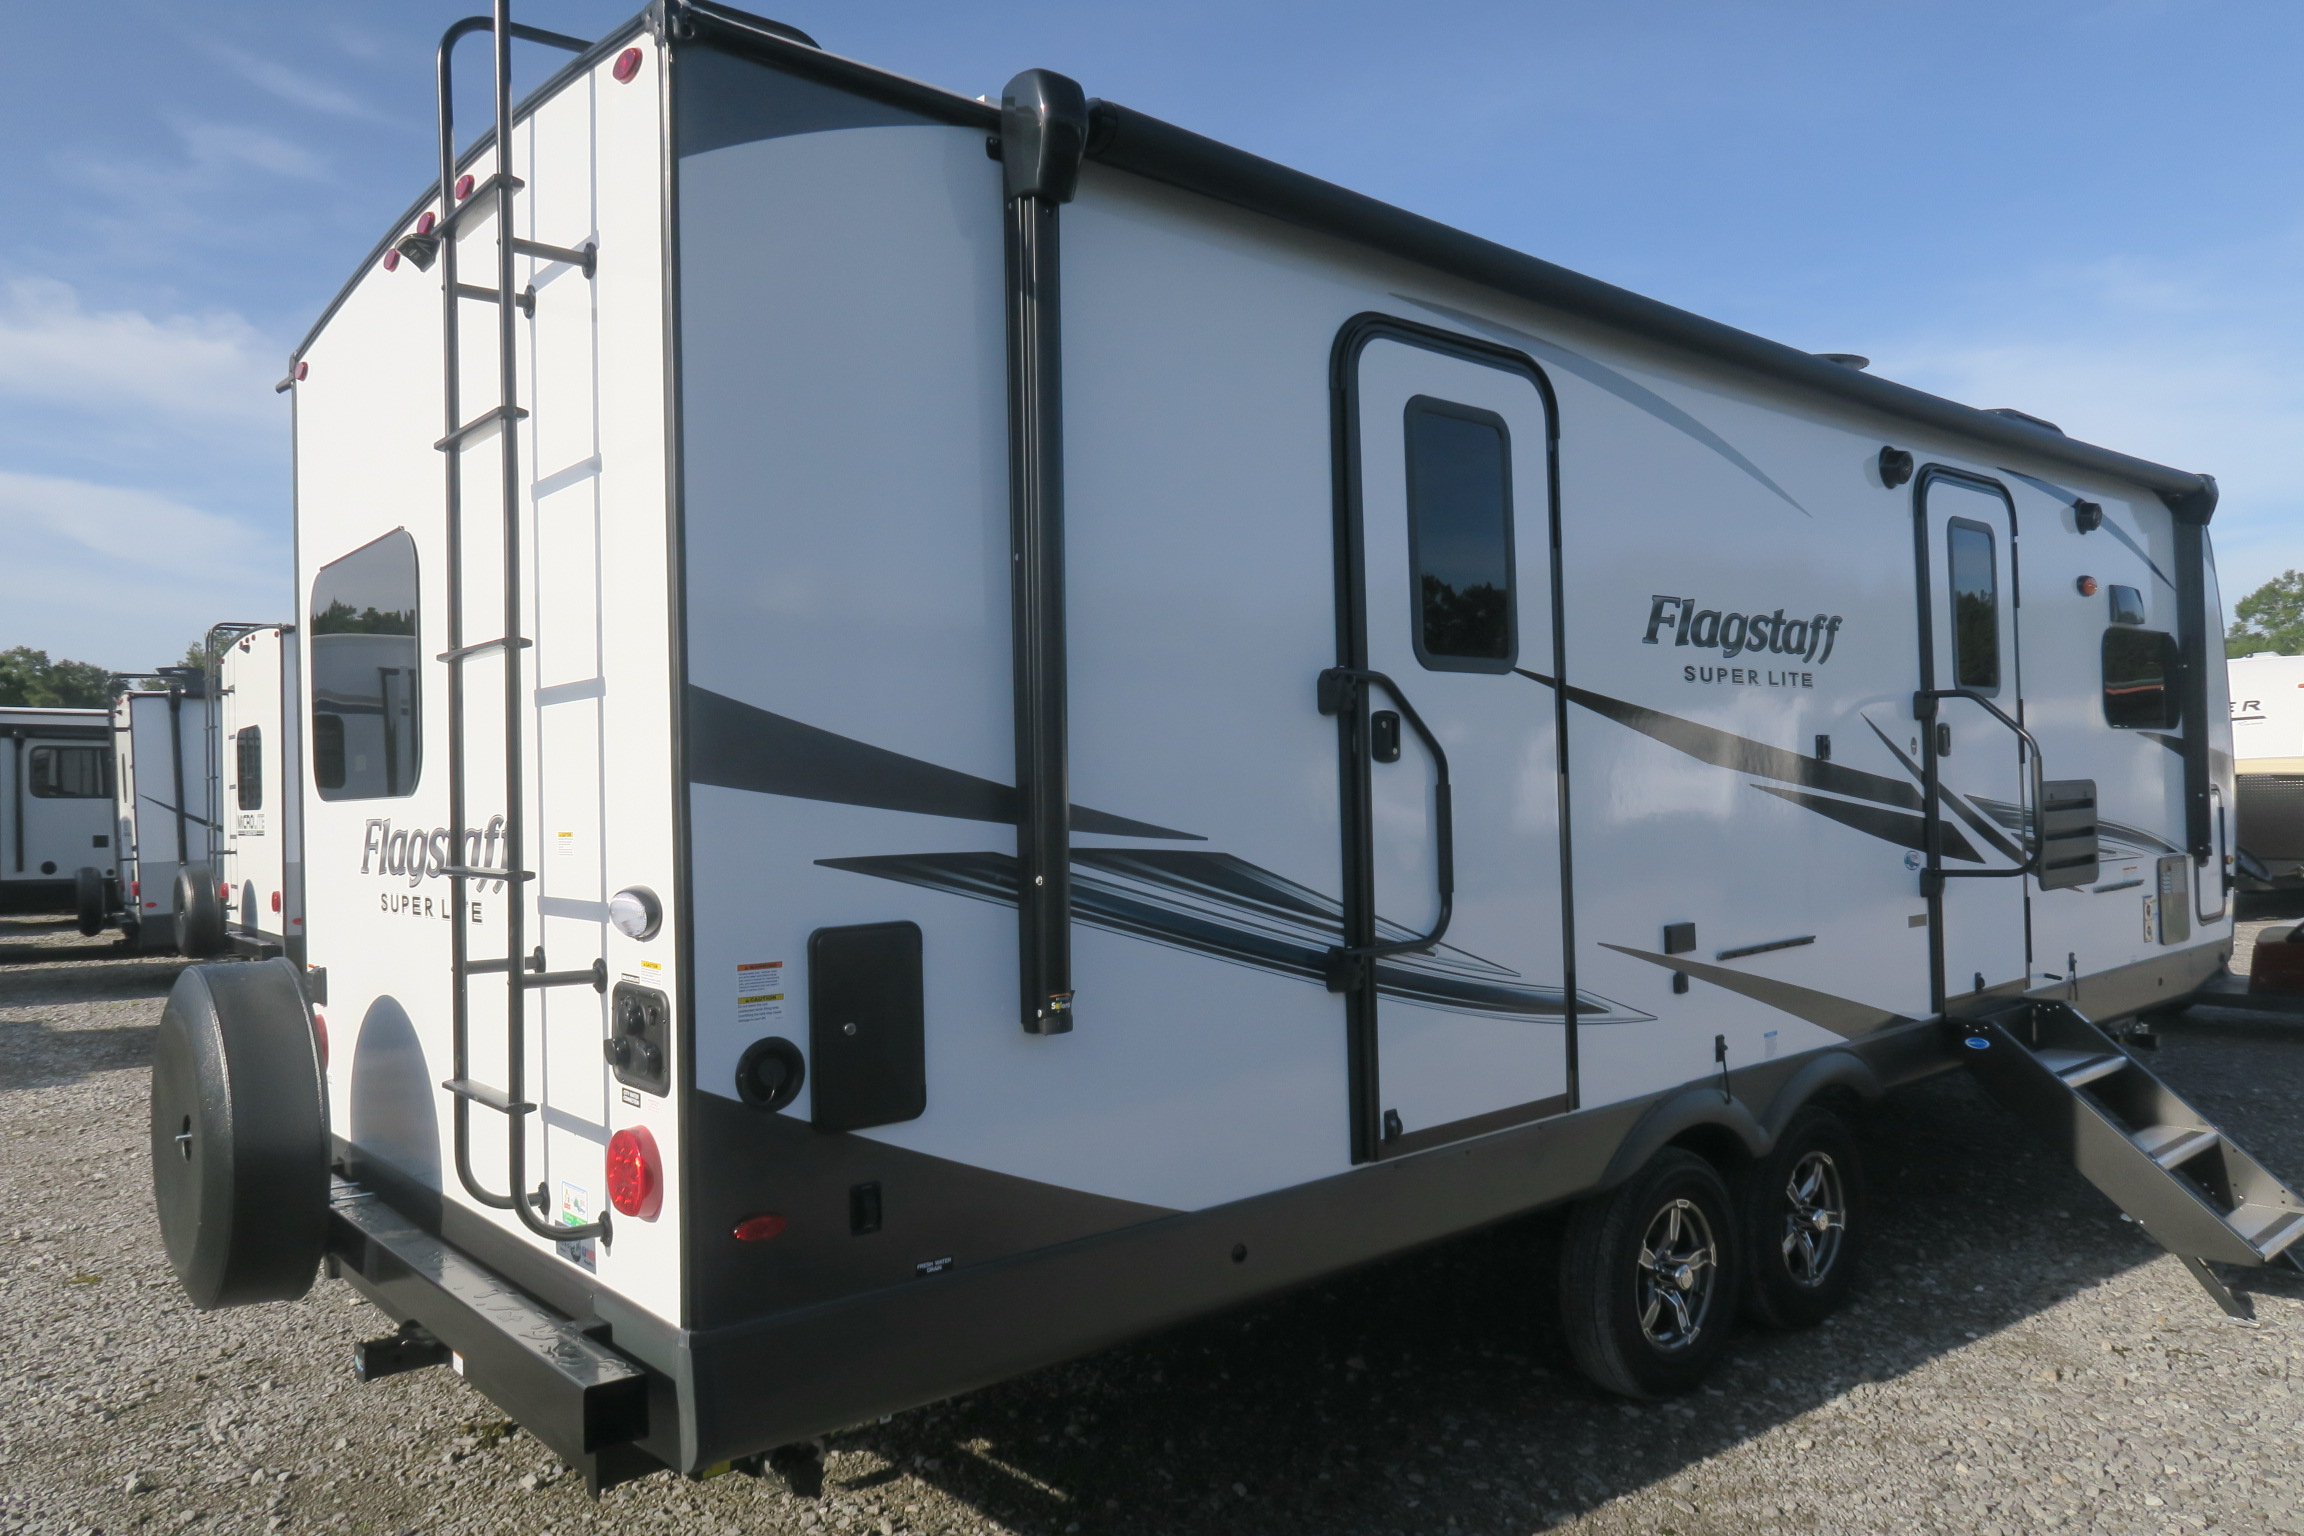 26 ft flagstaff travel trailer